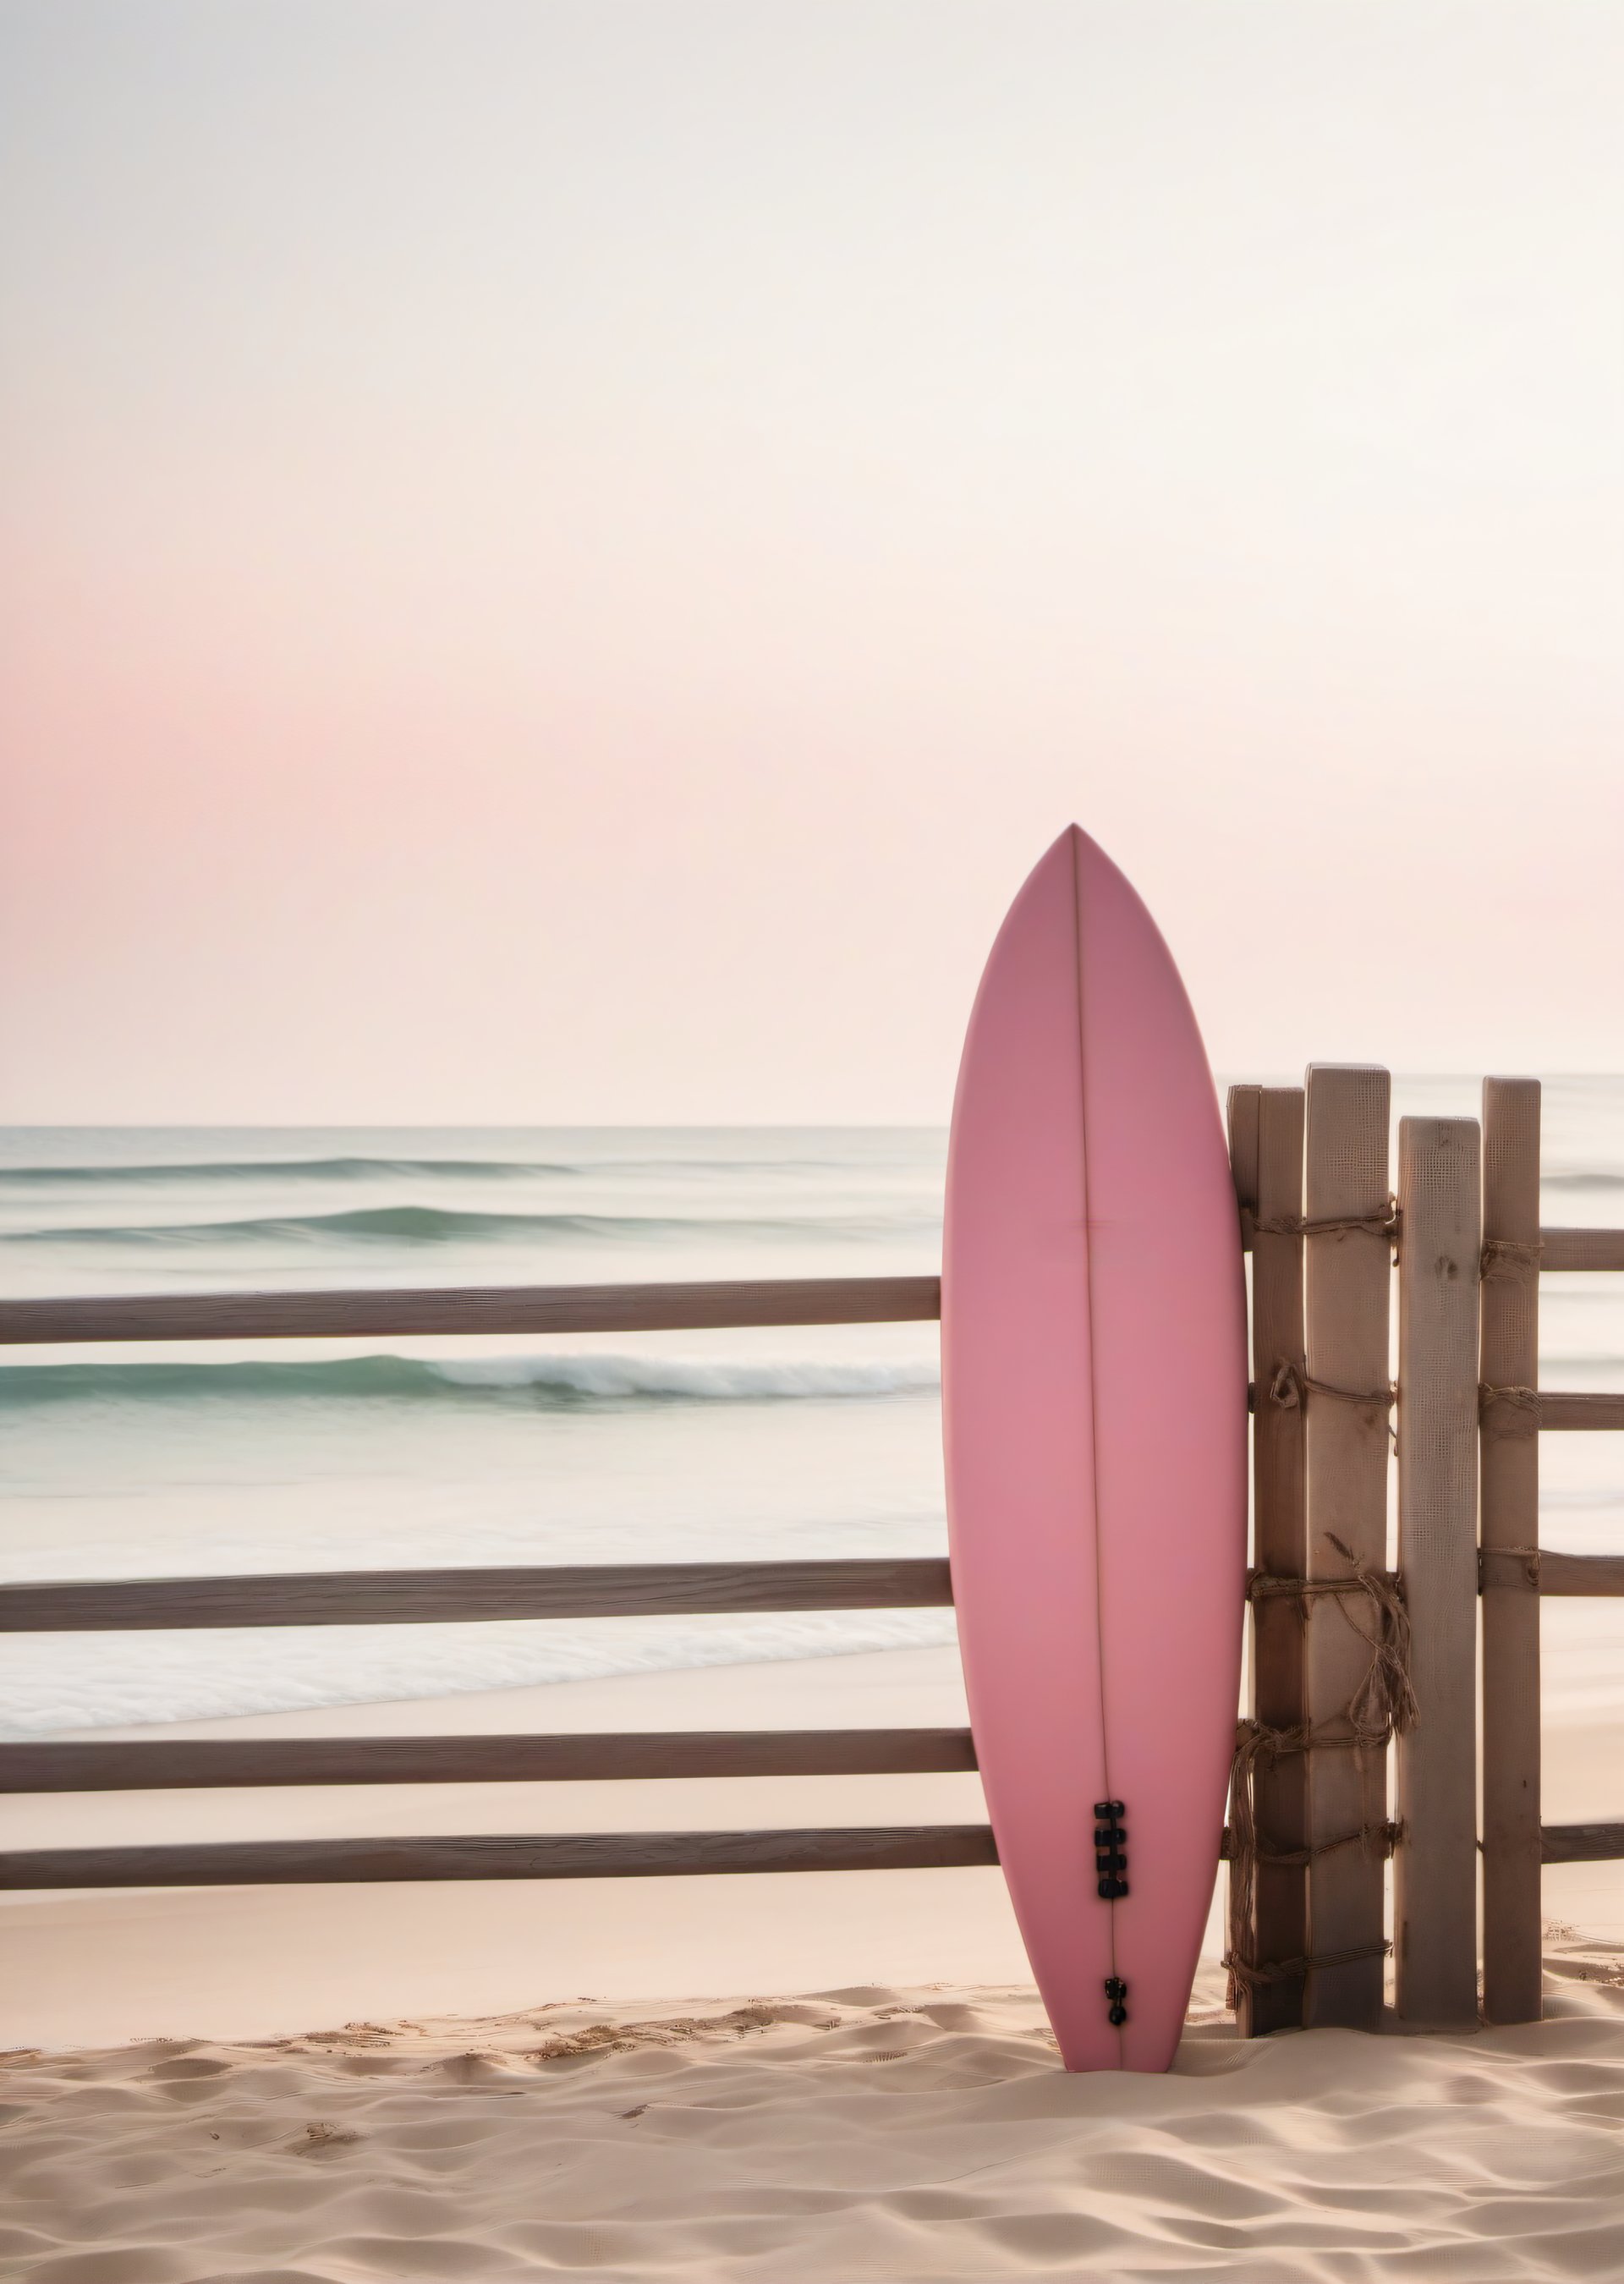 pink surfboard